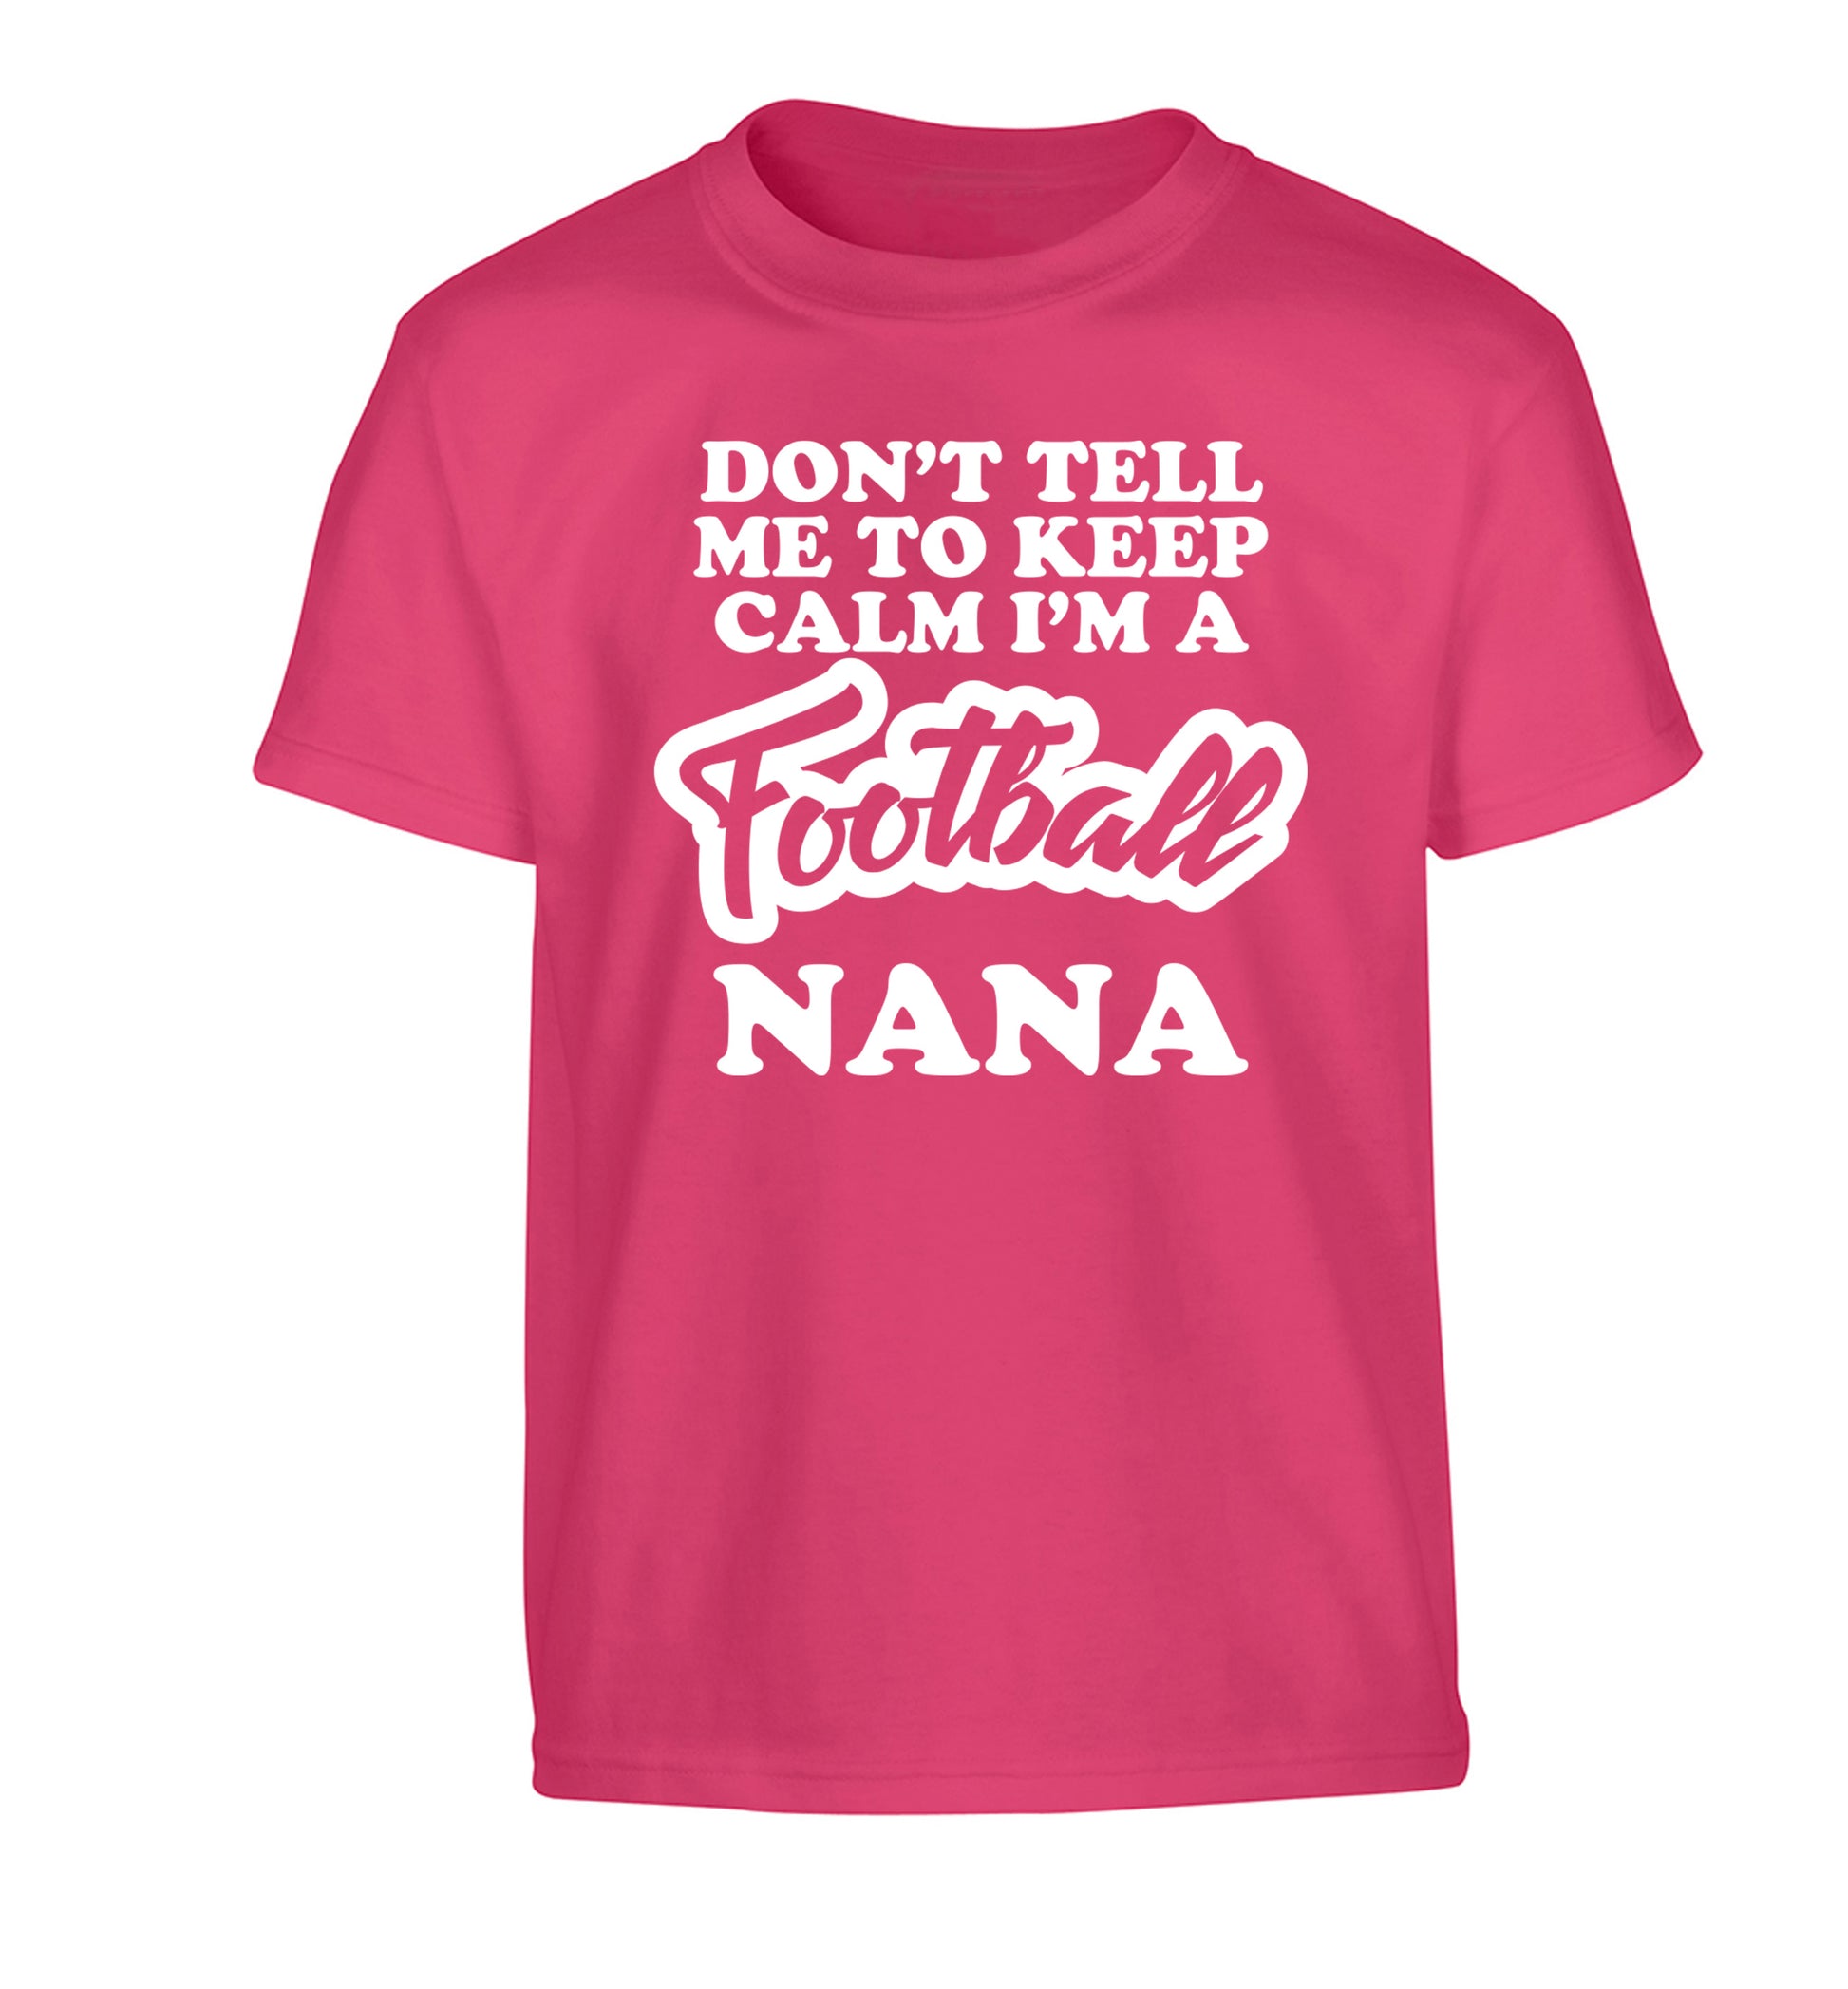 Don't tell me to keep calm I'm a football nana Children's pink Tshirt 12-14 Years